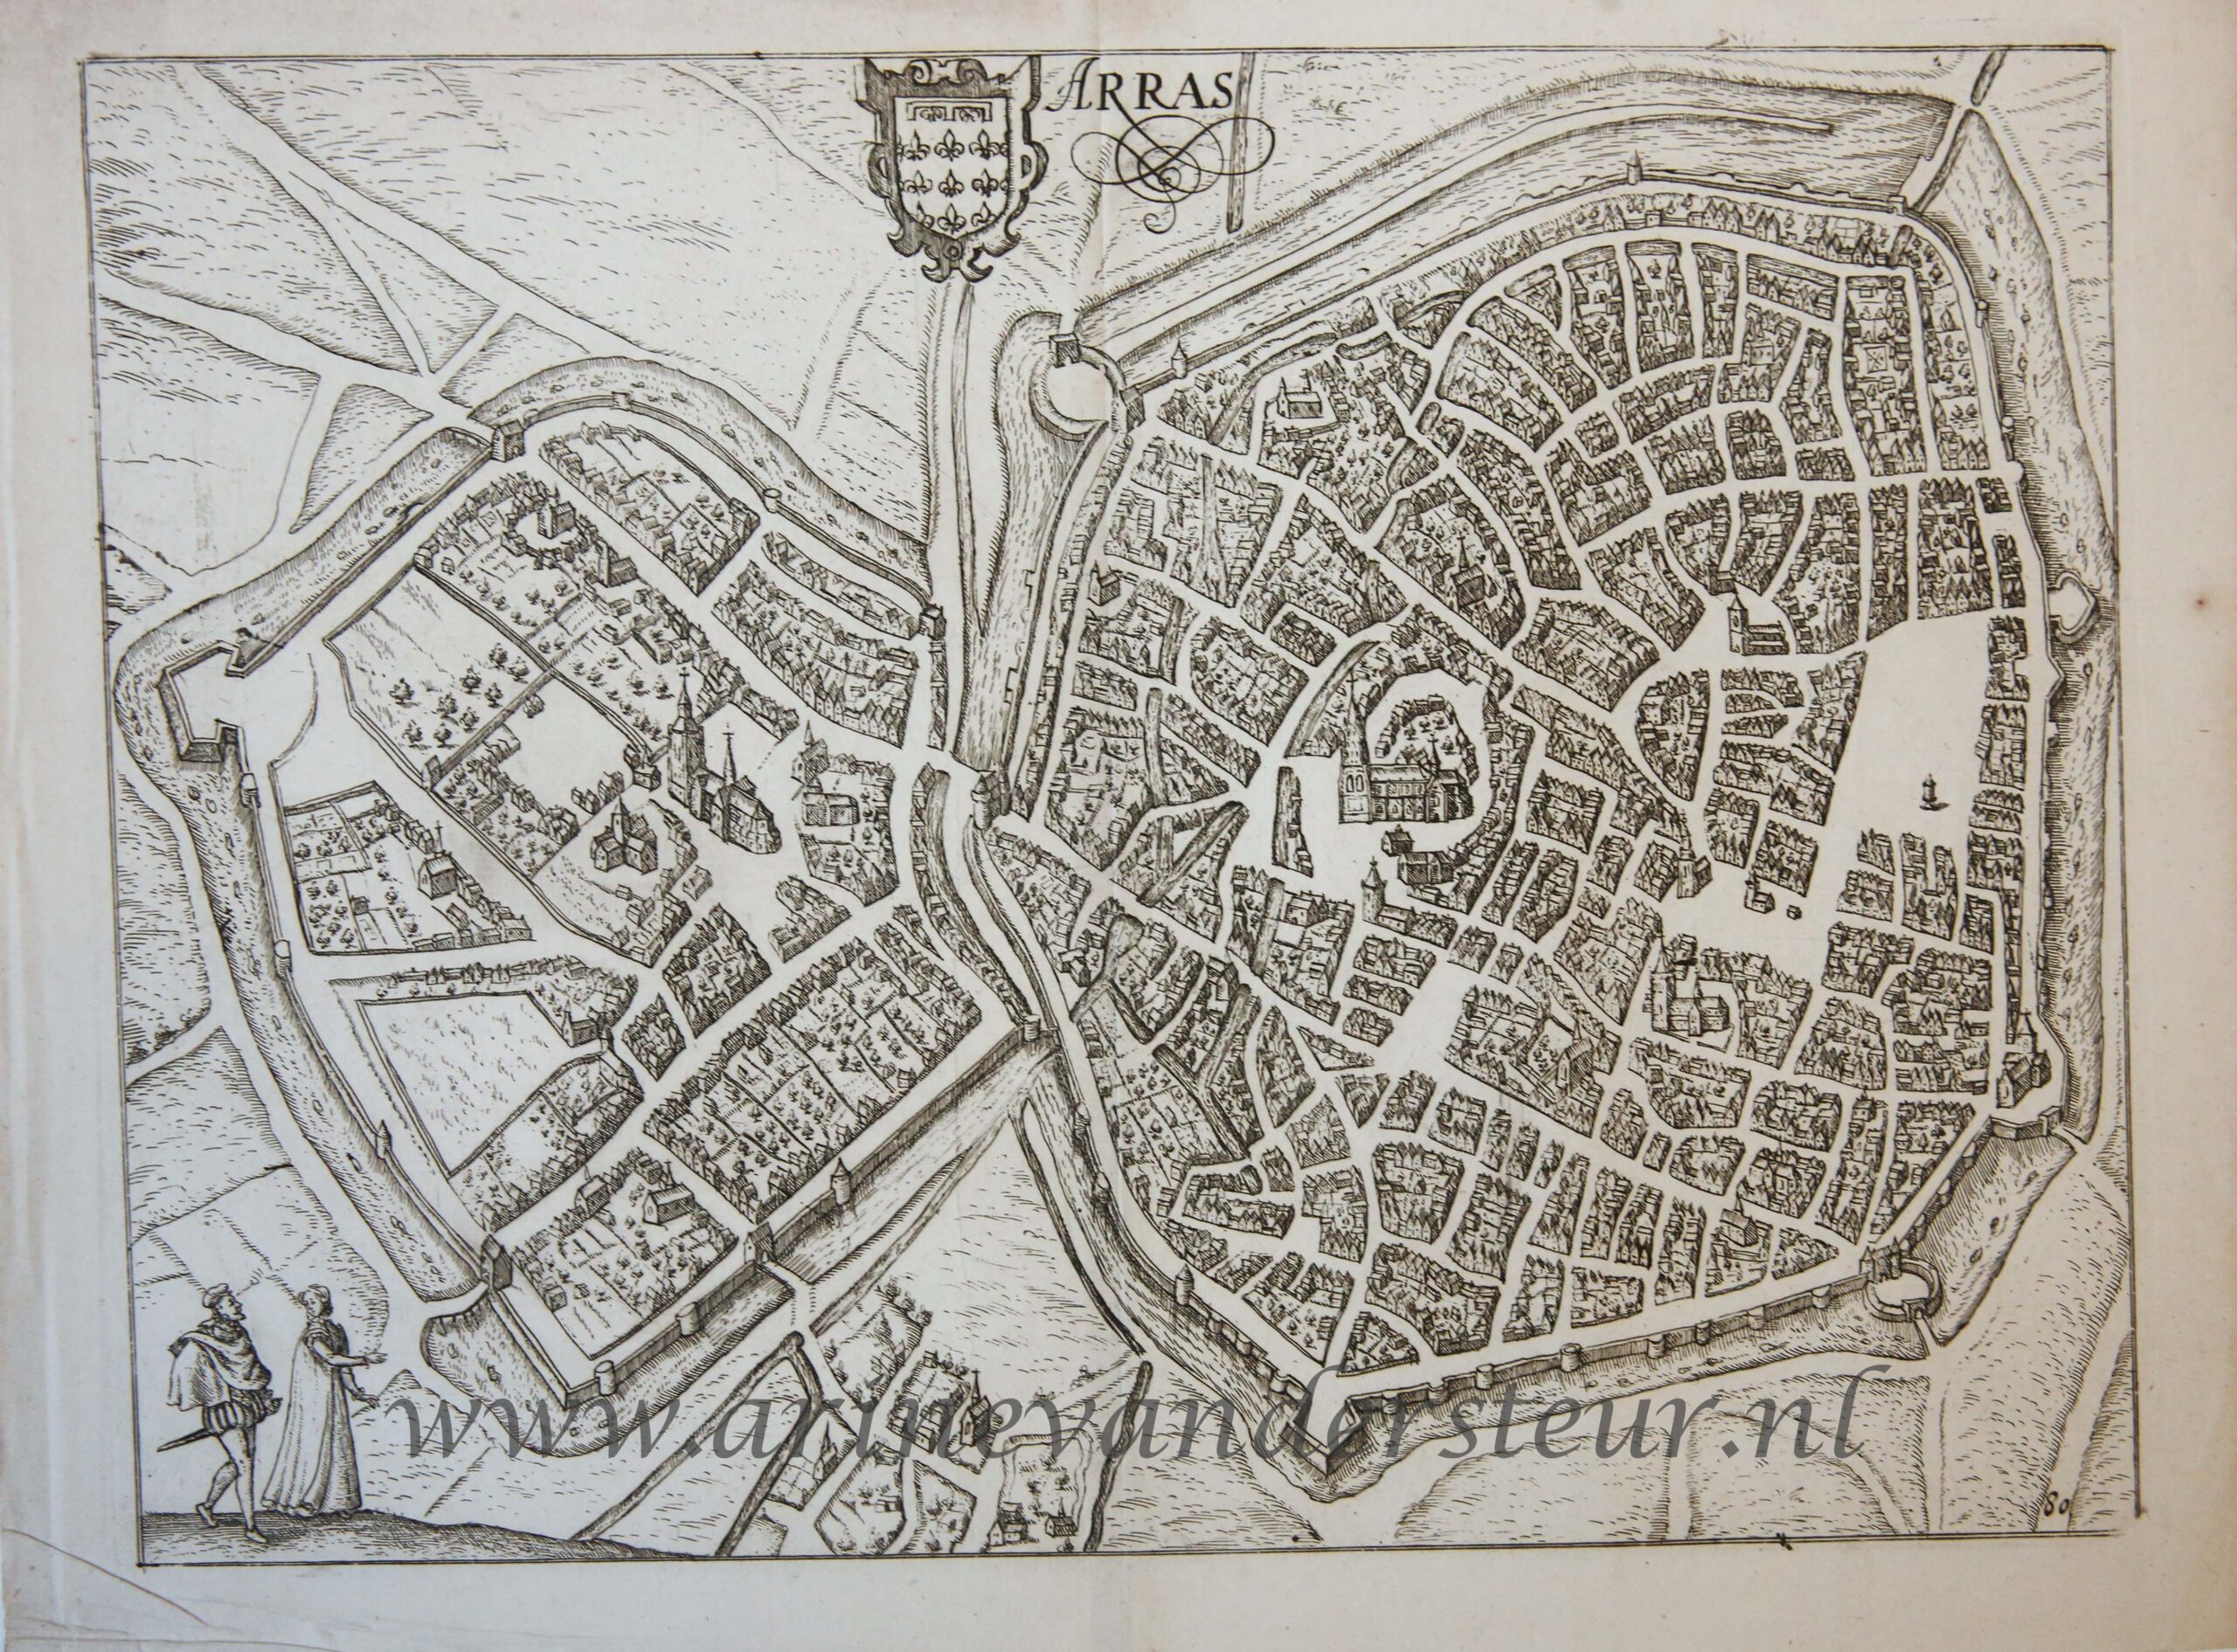 [Antique print, cartography] Arras, published ca. 1610.